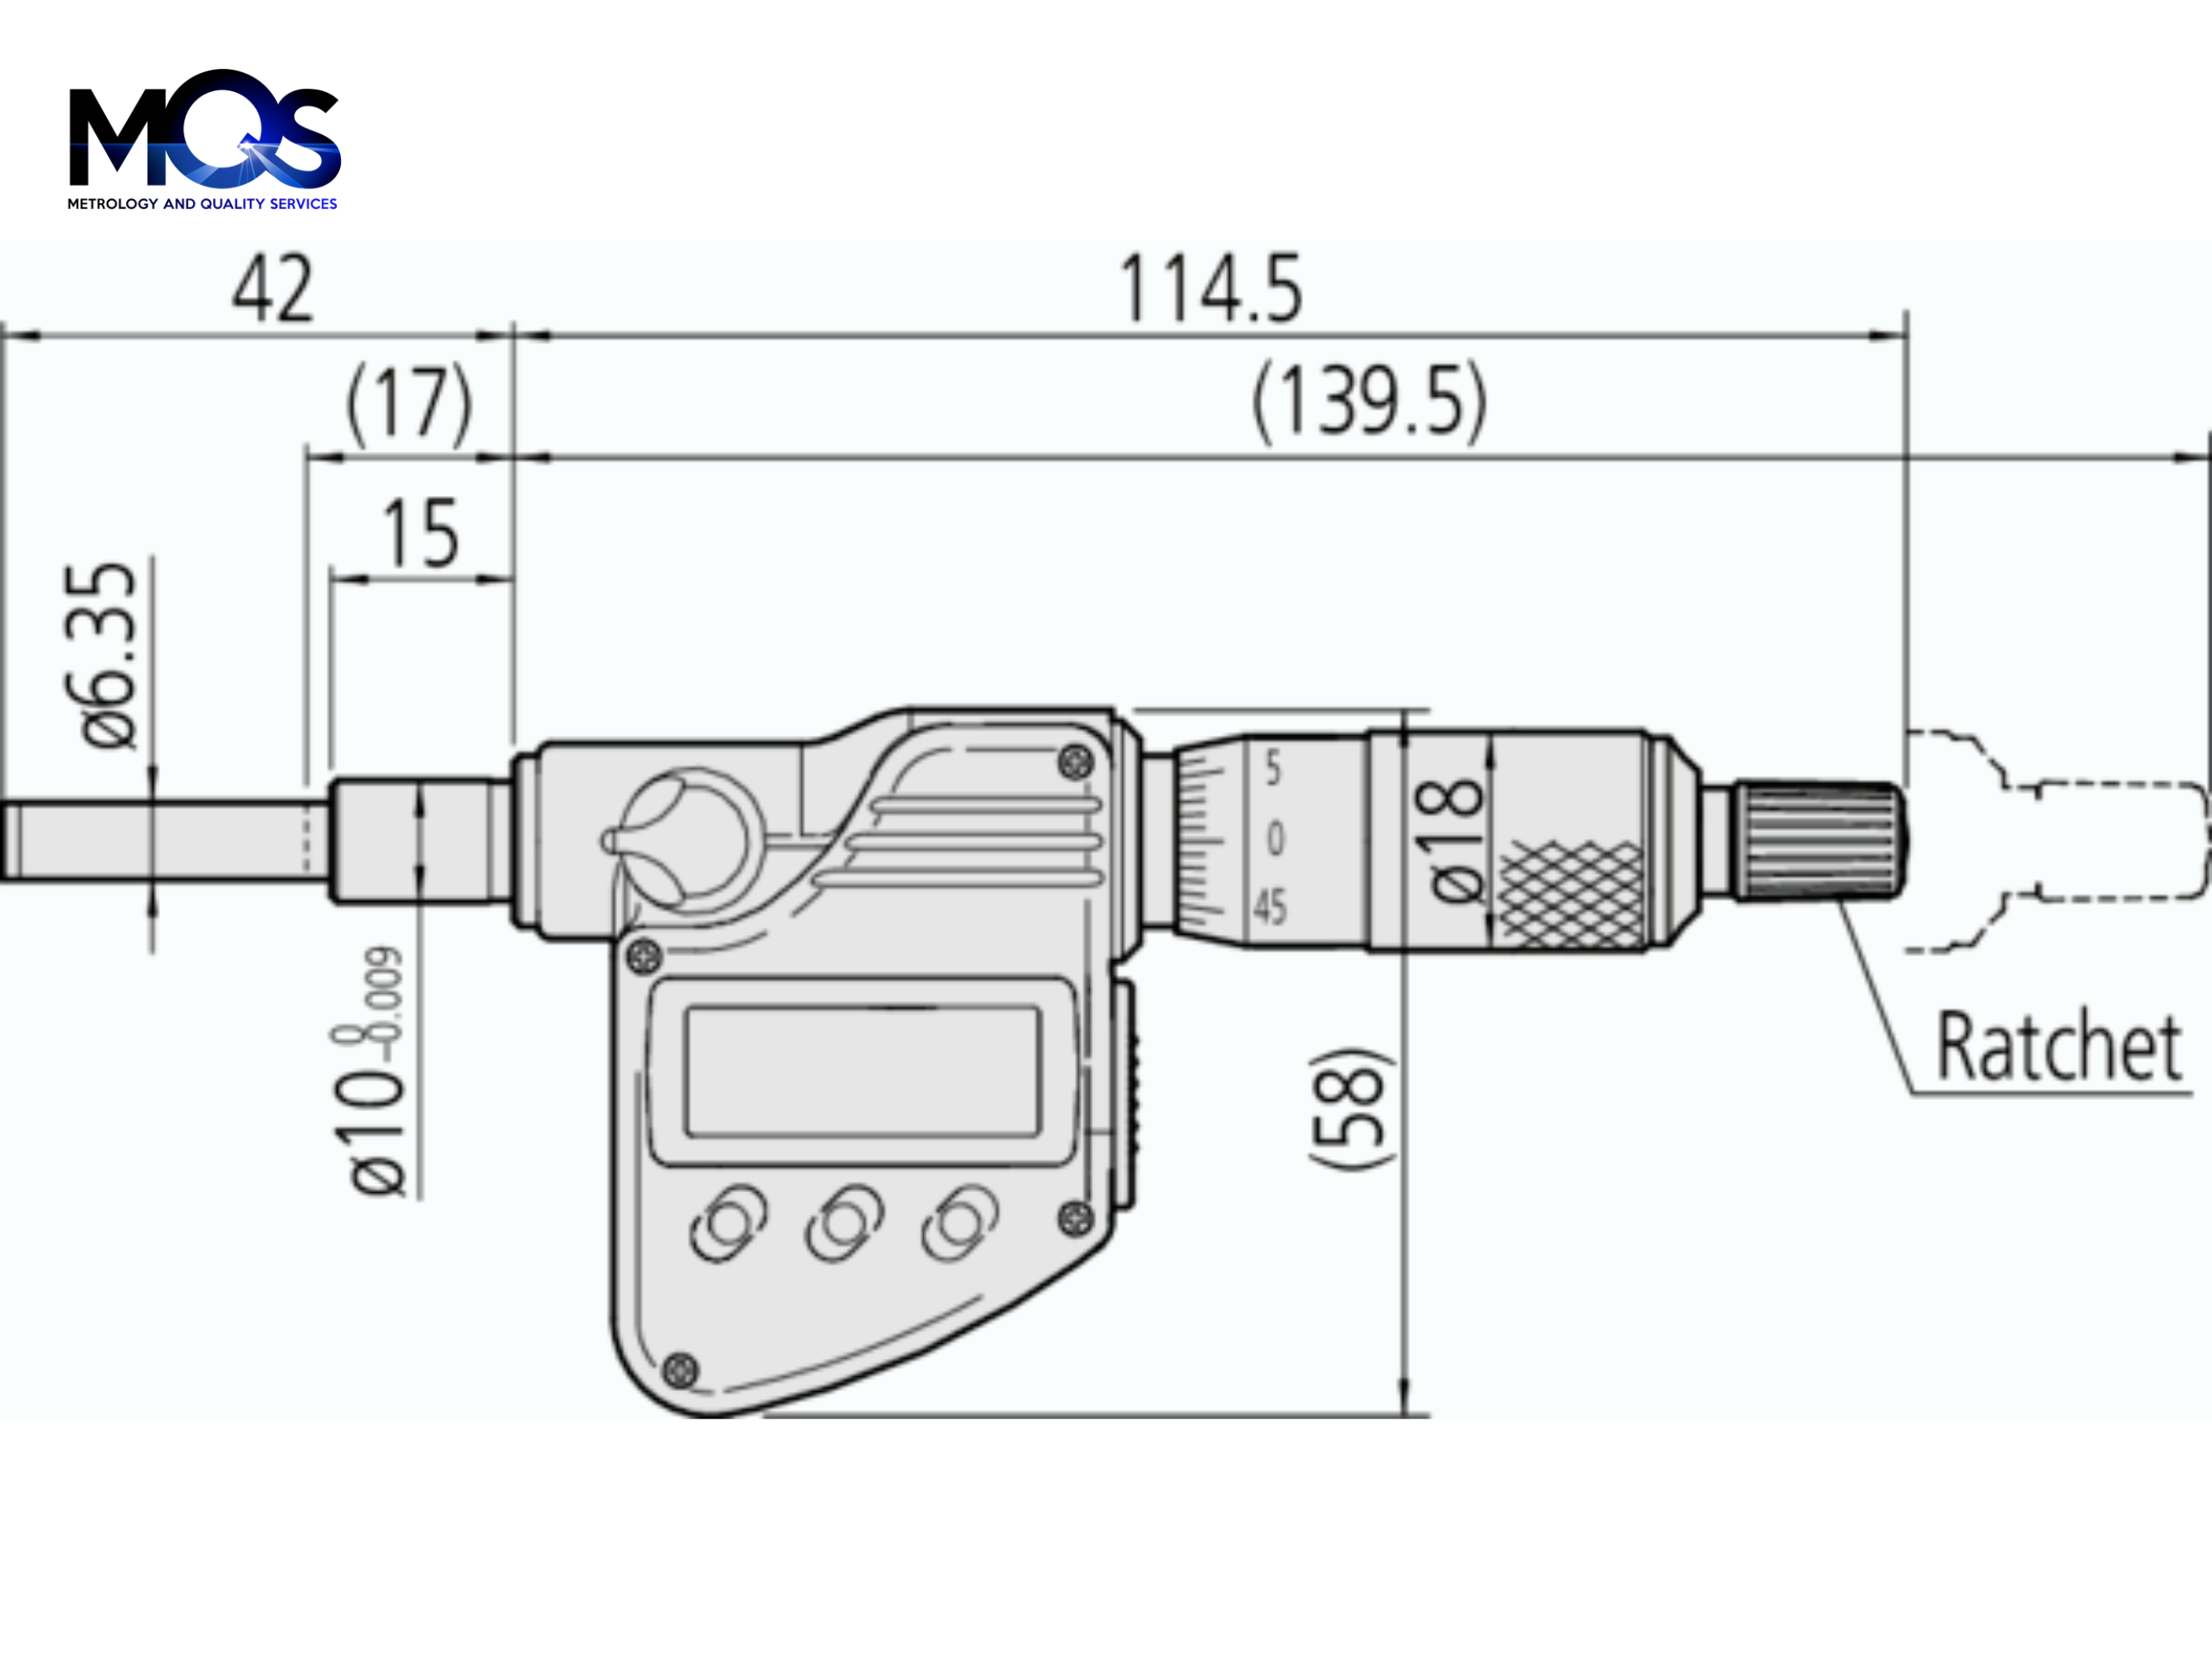 Digital Micrometer Head 0-25mm, Flat Spindle, 10mm Plain Stem 350-251-30